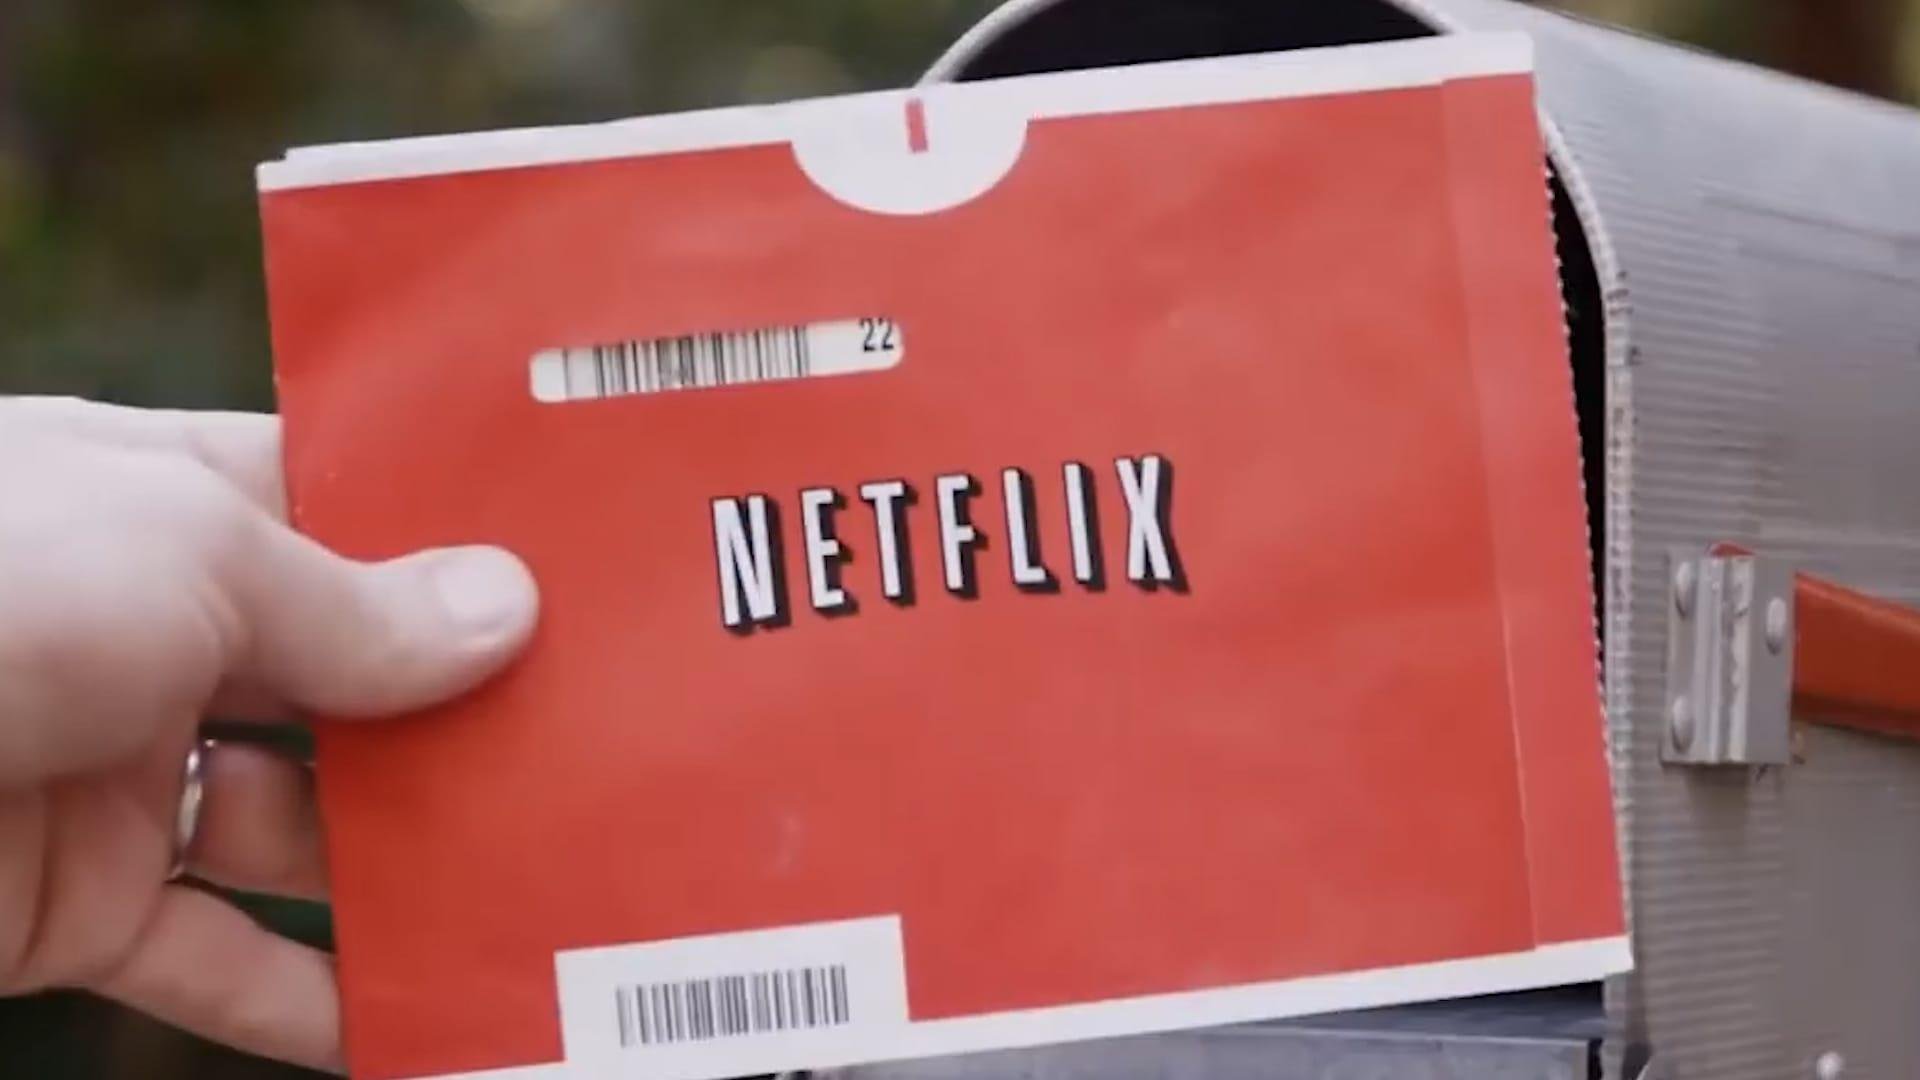 Lista de Códigos Secretos da Netflix - BlogTv